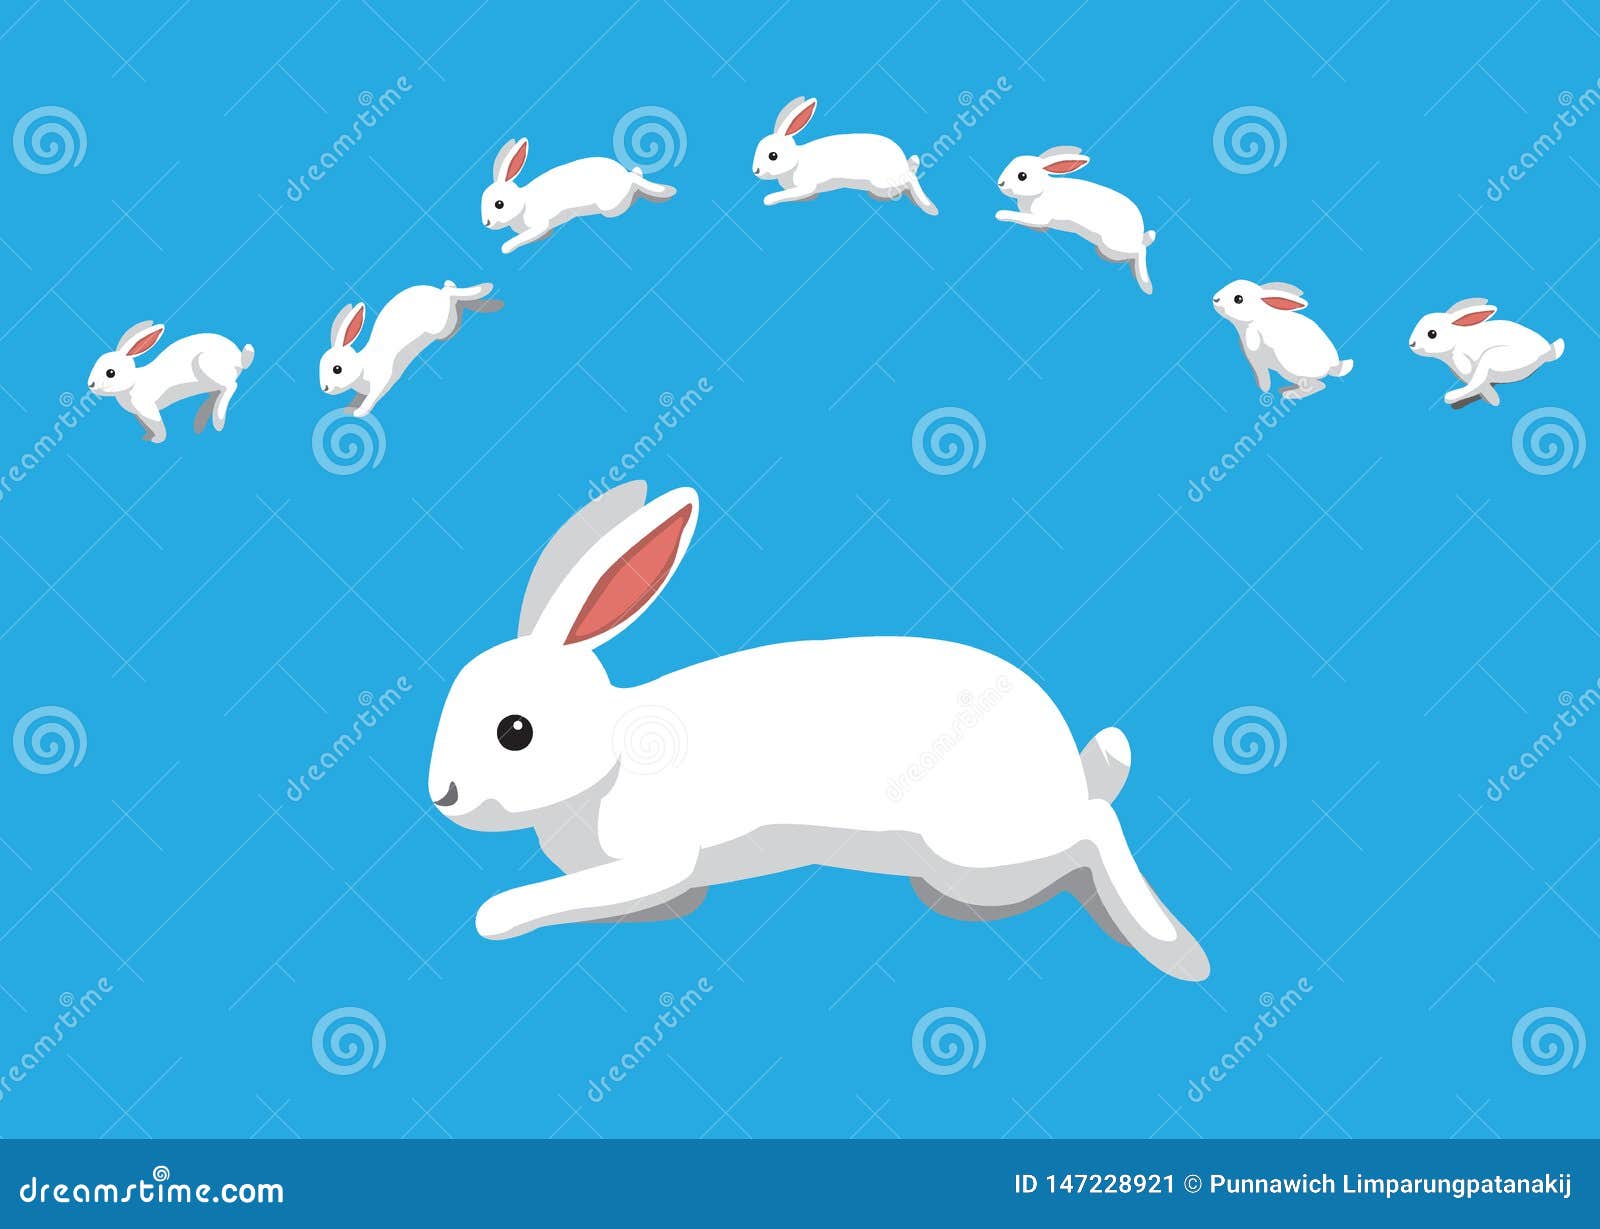 White Rabbit Jumping Motion Animation Sequence Cartoon Vector Illustration  Stock Vector - Illustration of bunny, breeds: 147228921